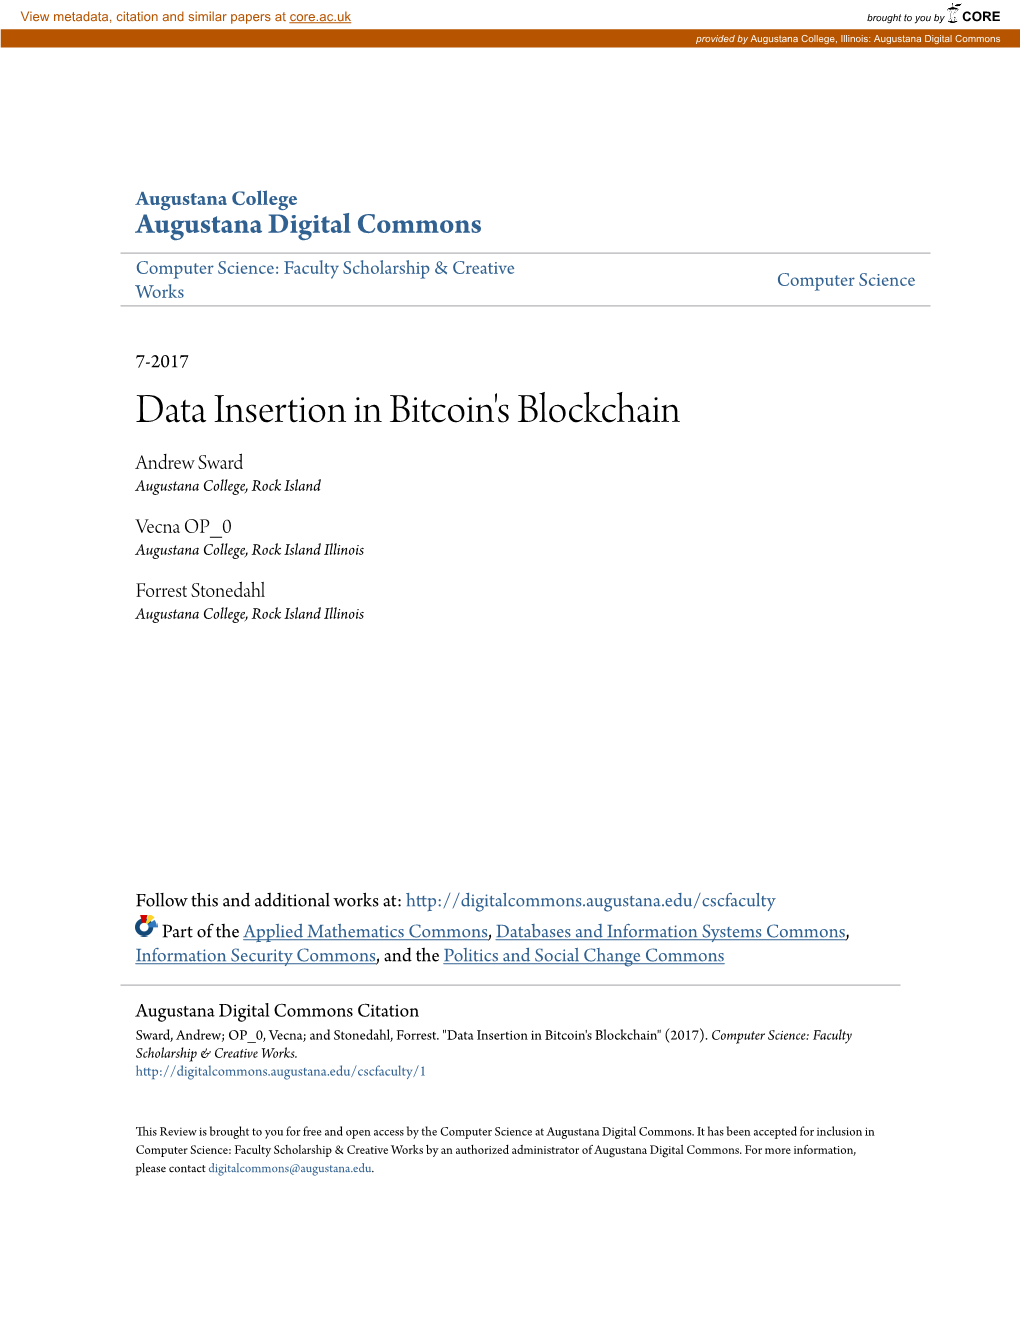 Data Insertion in Bitcoin's Blockchain Andrew Sward Augustana College, Rock Island